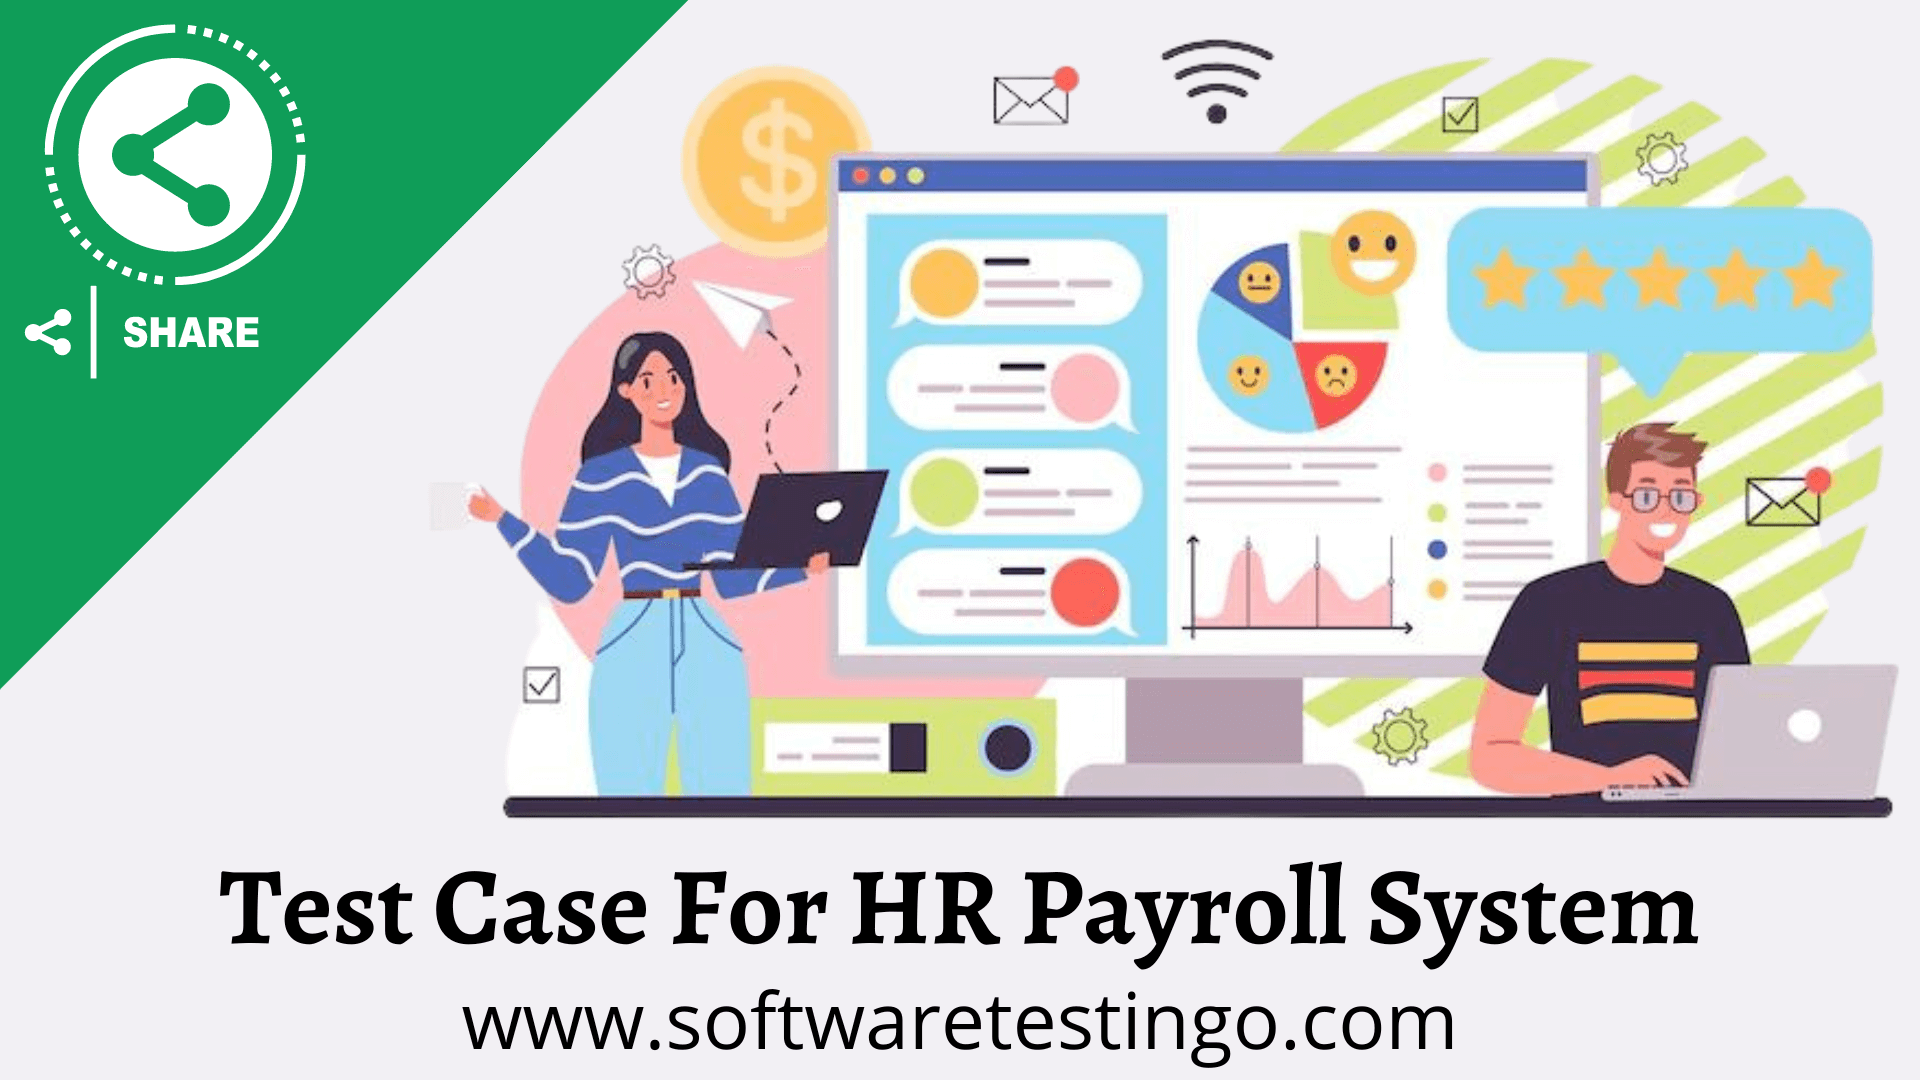 Test Case For HR Payroll System